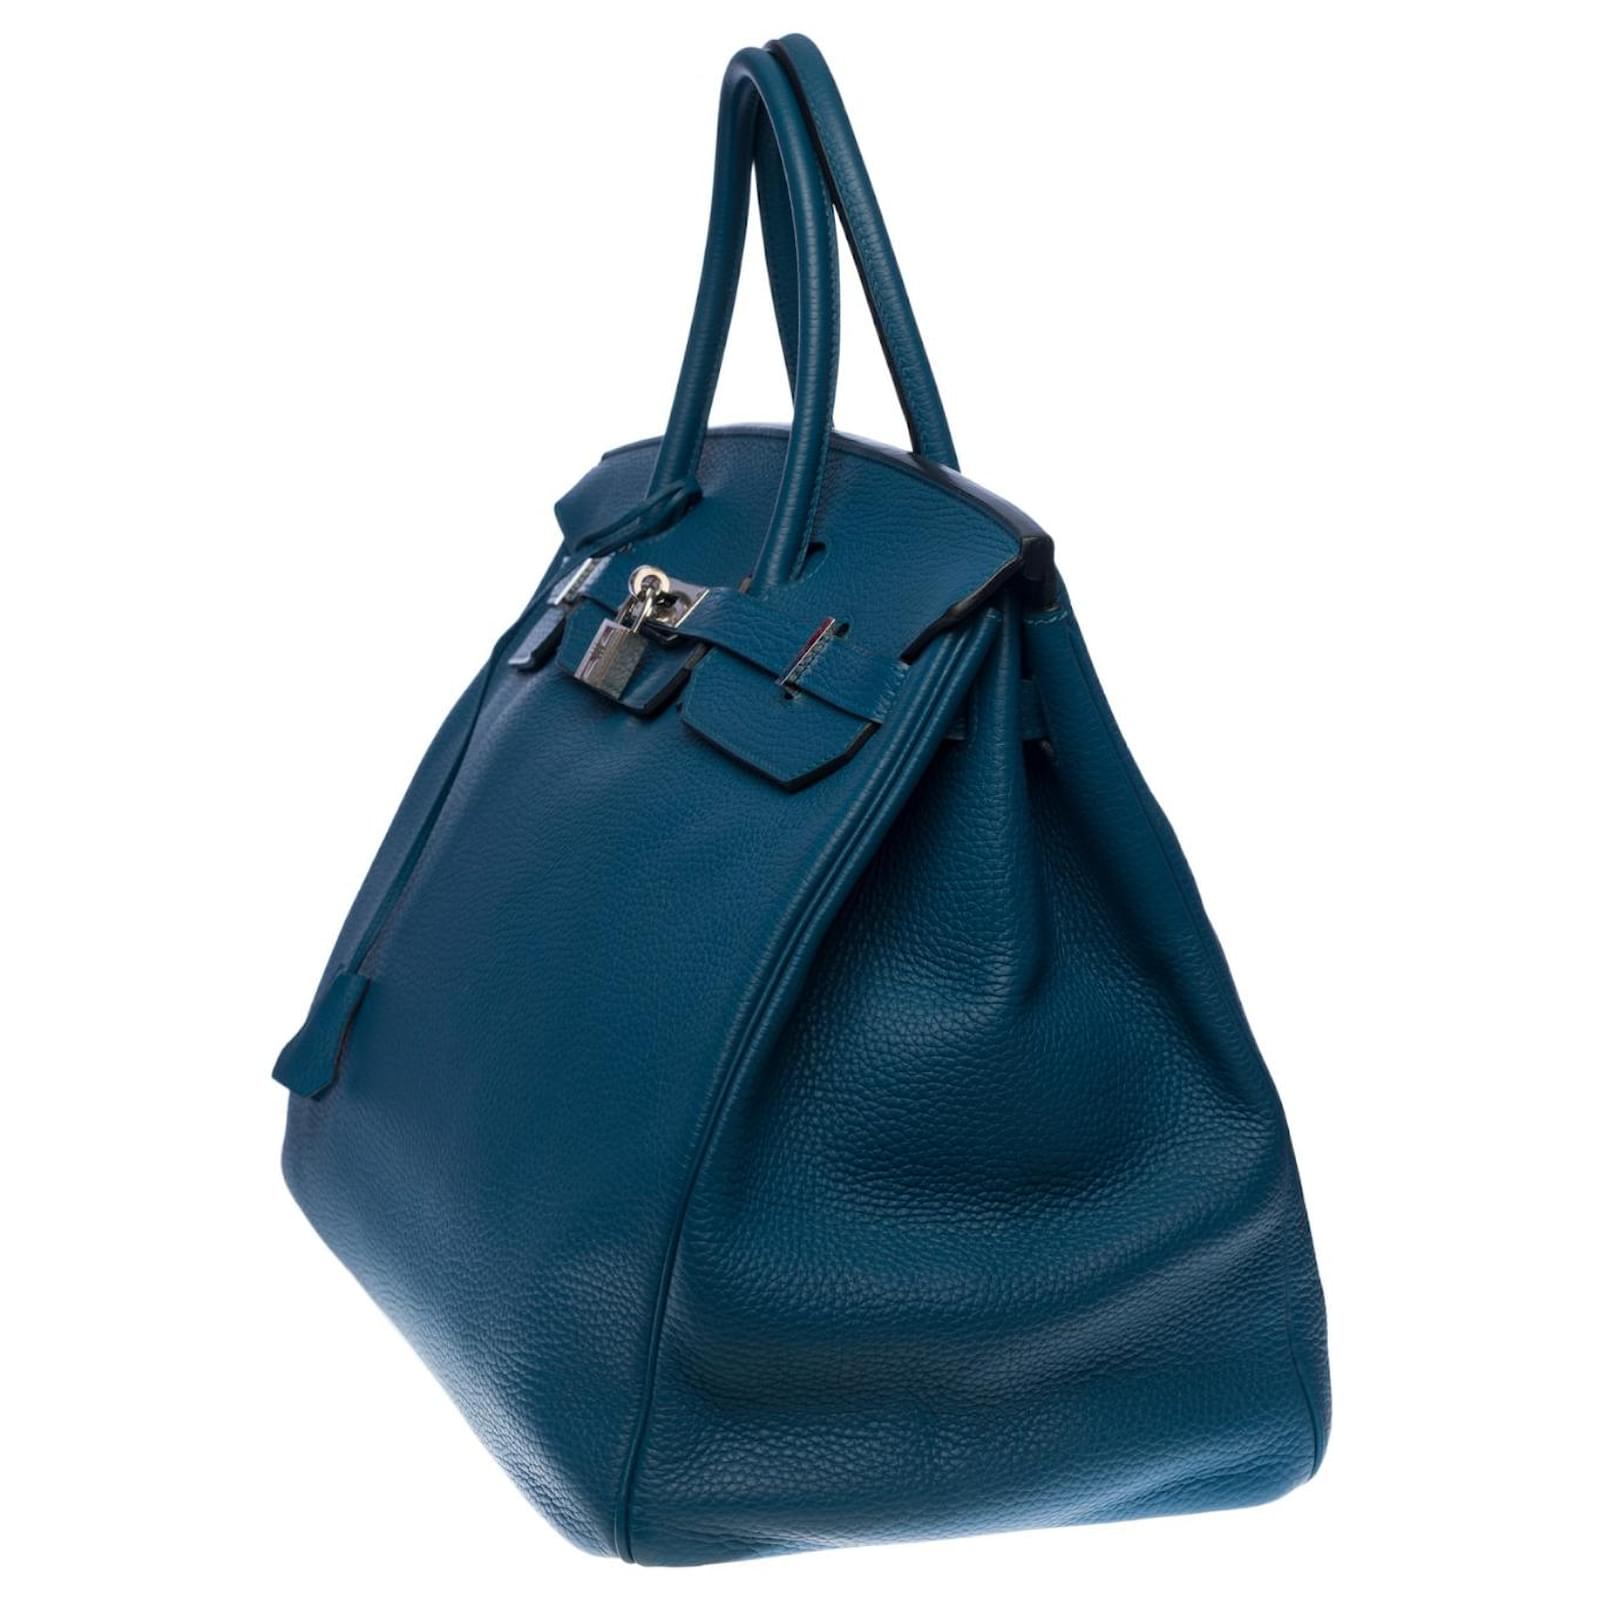 Hermès Stunning Hermes Birkin handbag 40 cm in cobalt blue Togo